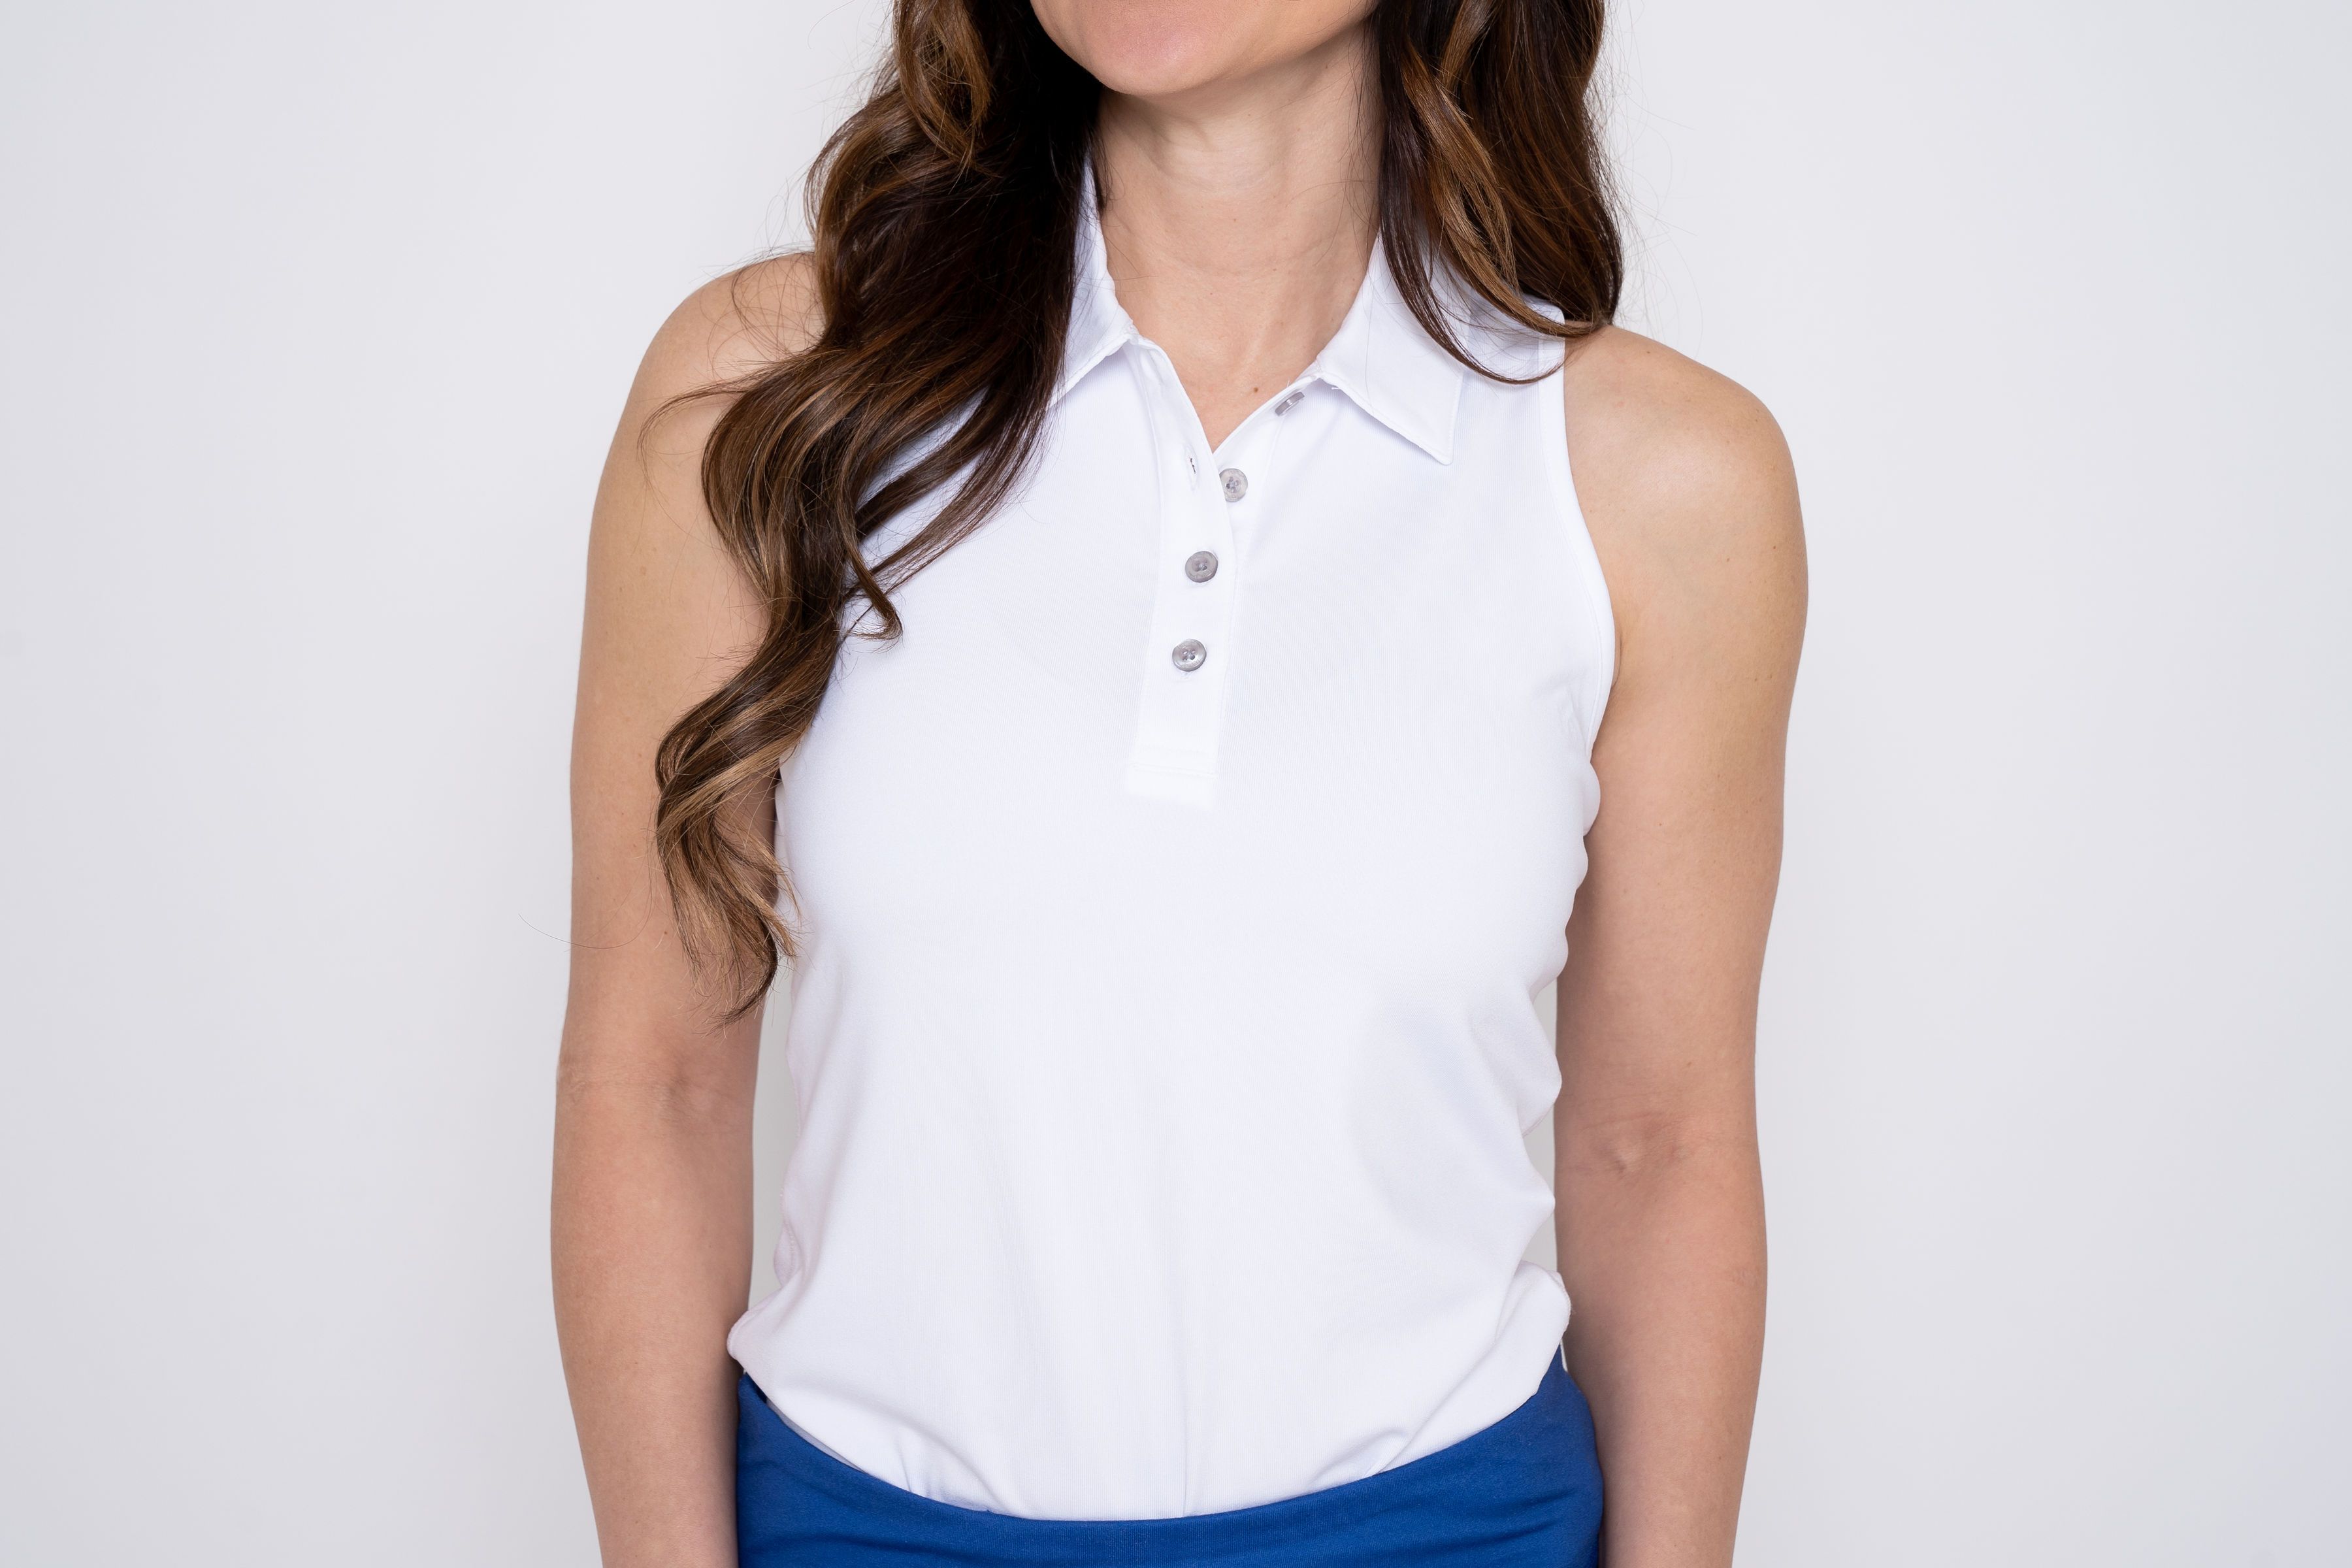 Racerback Golf Shirt - White Women's Golf Shirt Taylor Jordan Apparel White X-Small 